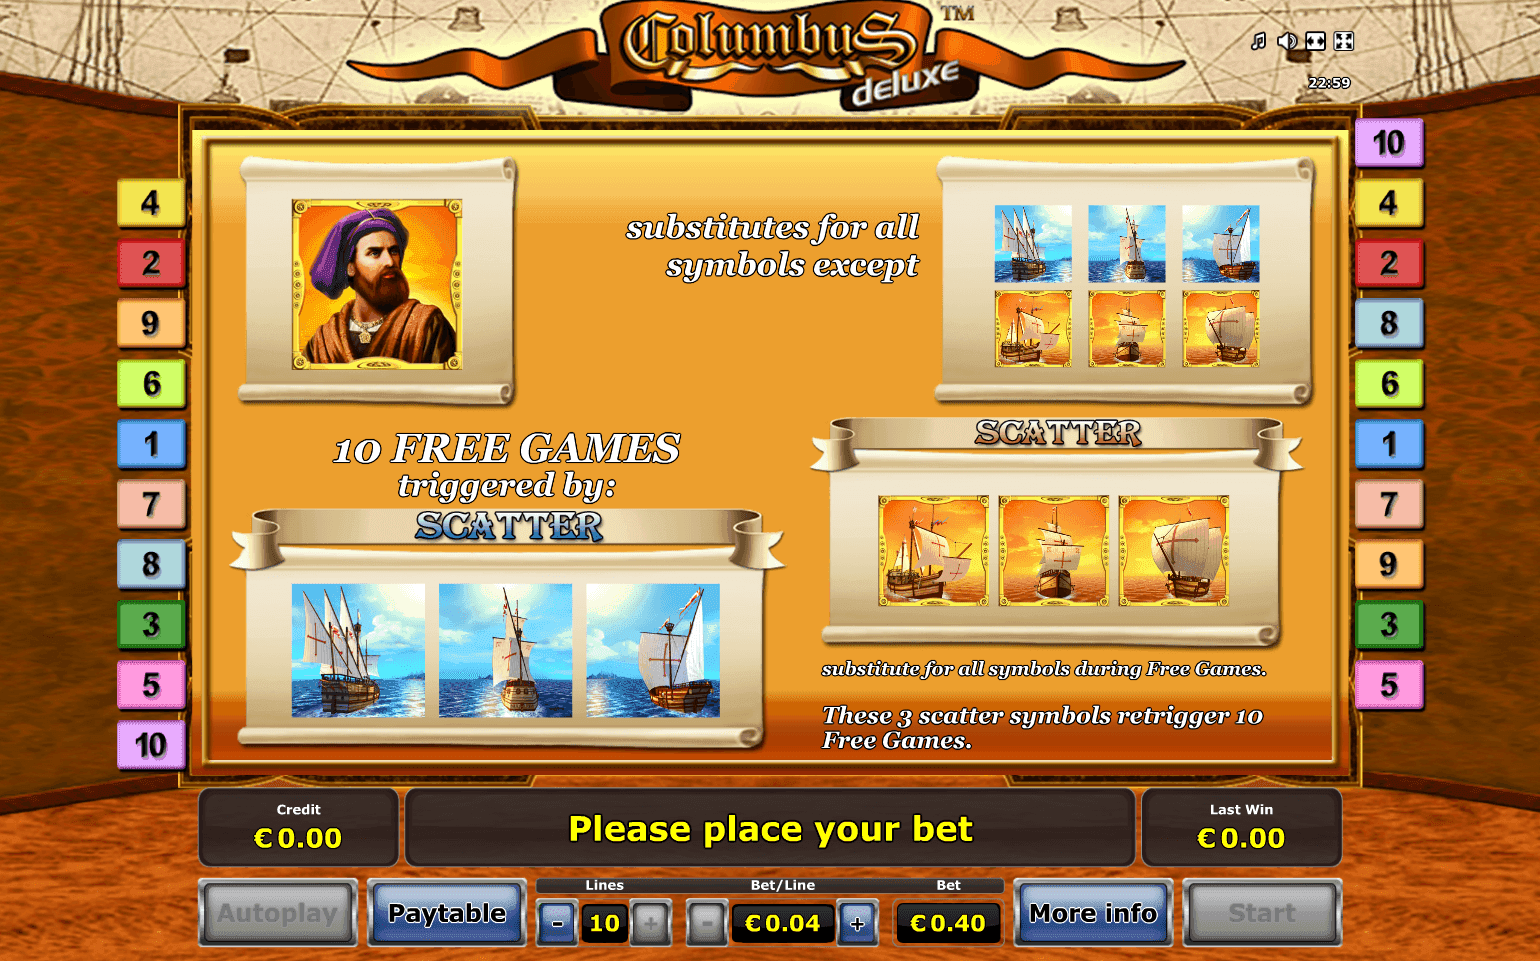 Mobile Casino Games Download